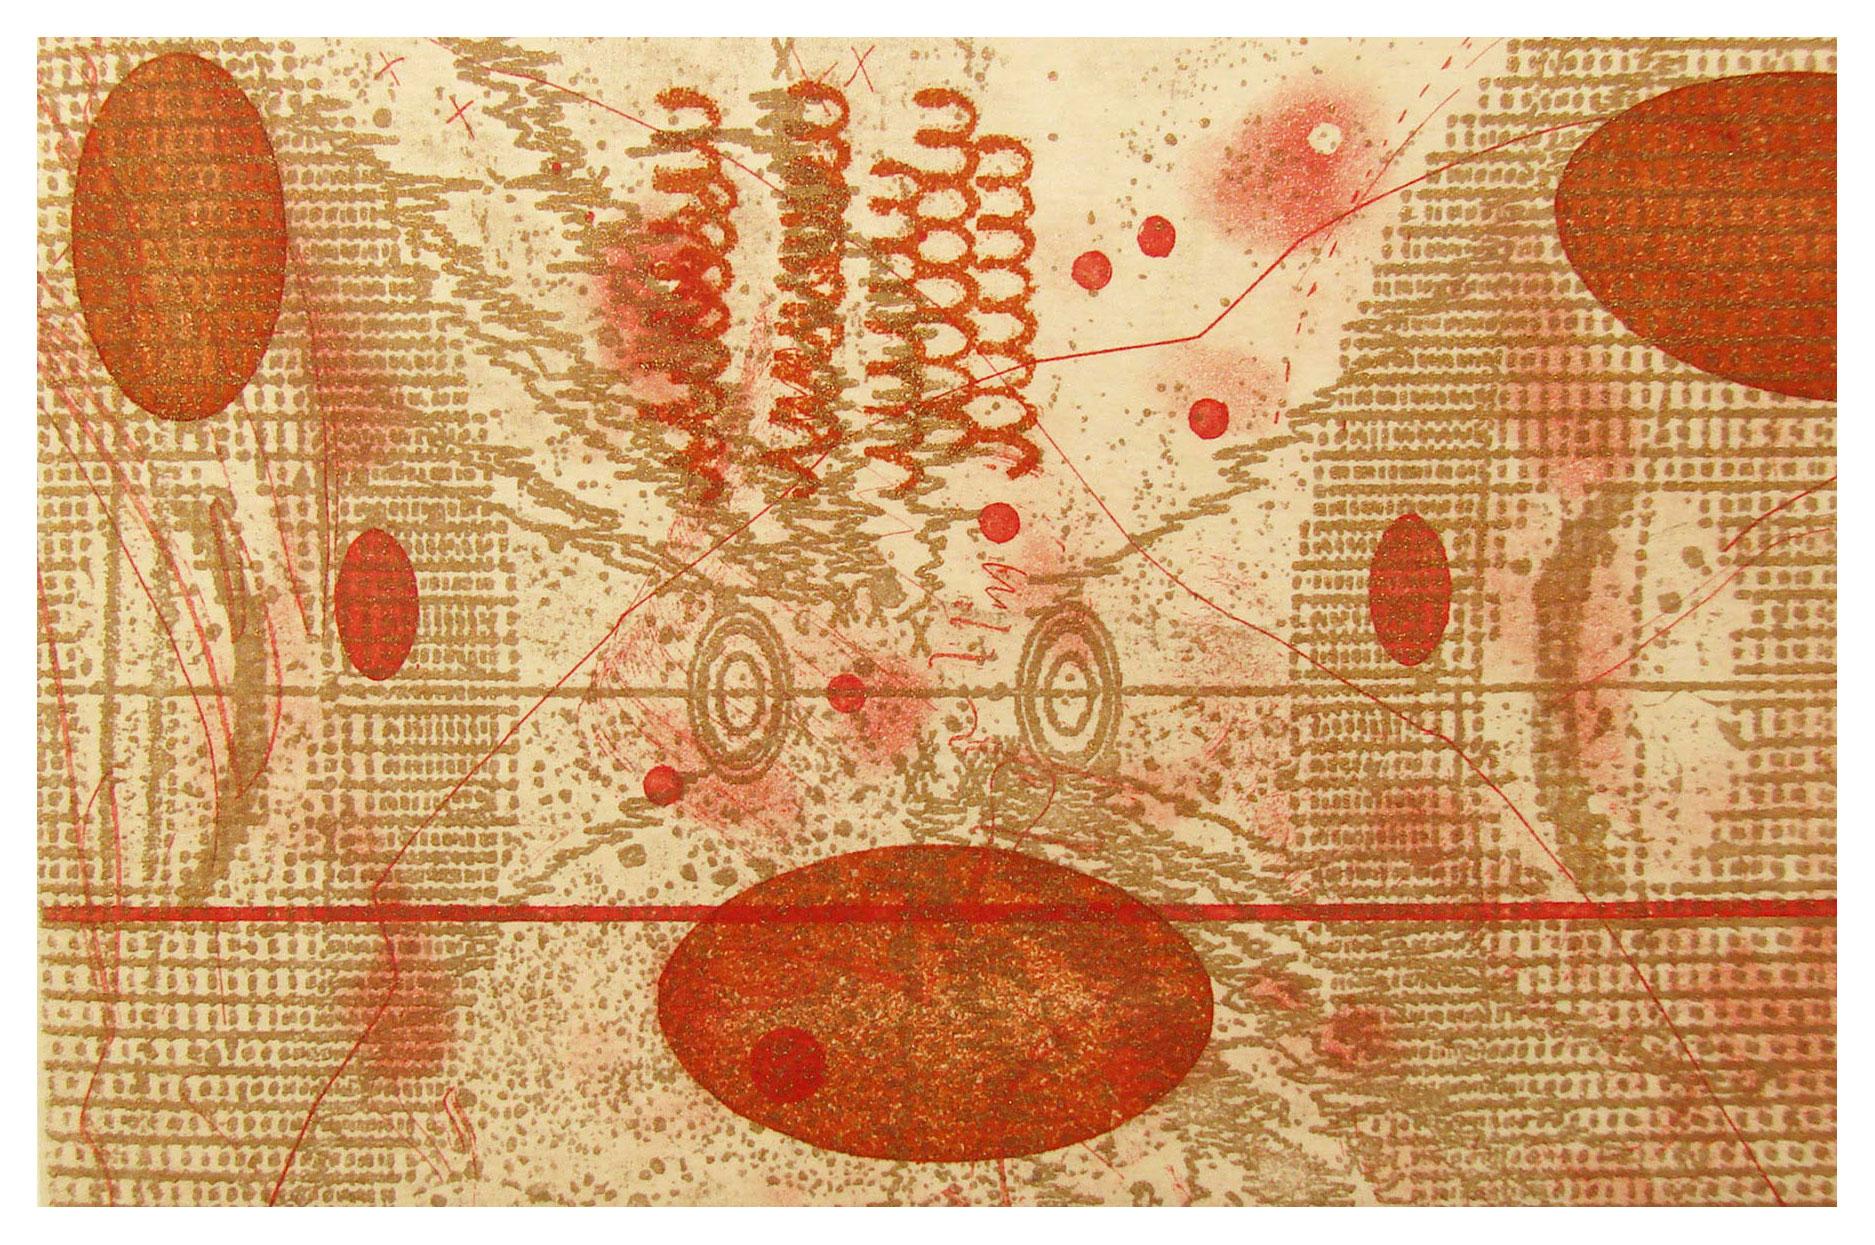 Abstract Print Rosalyn Richards - Collision